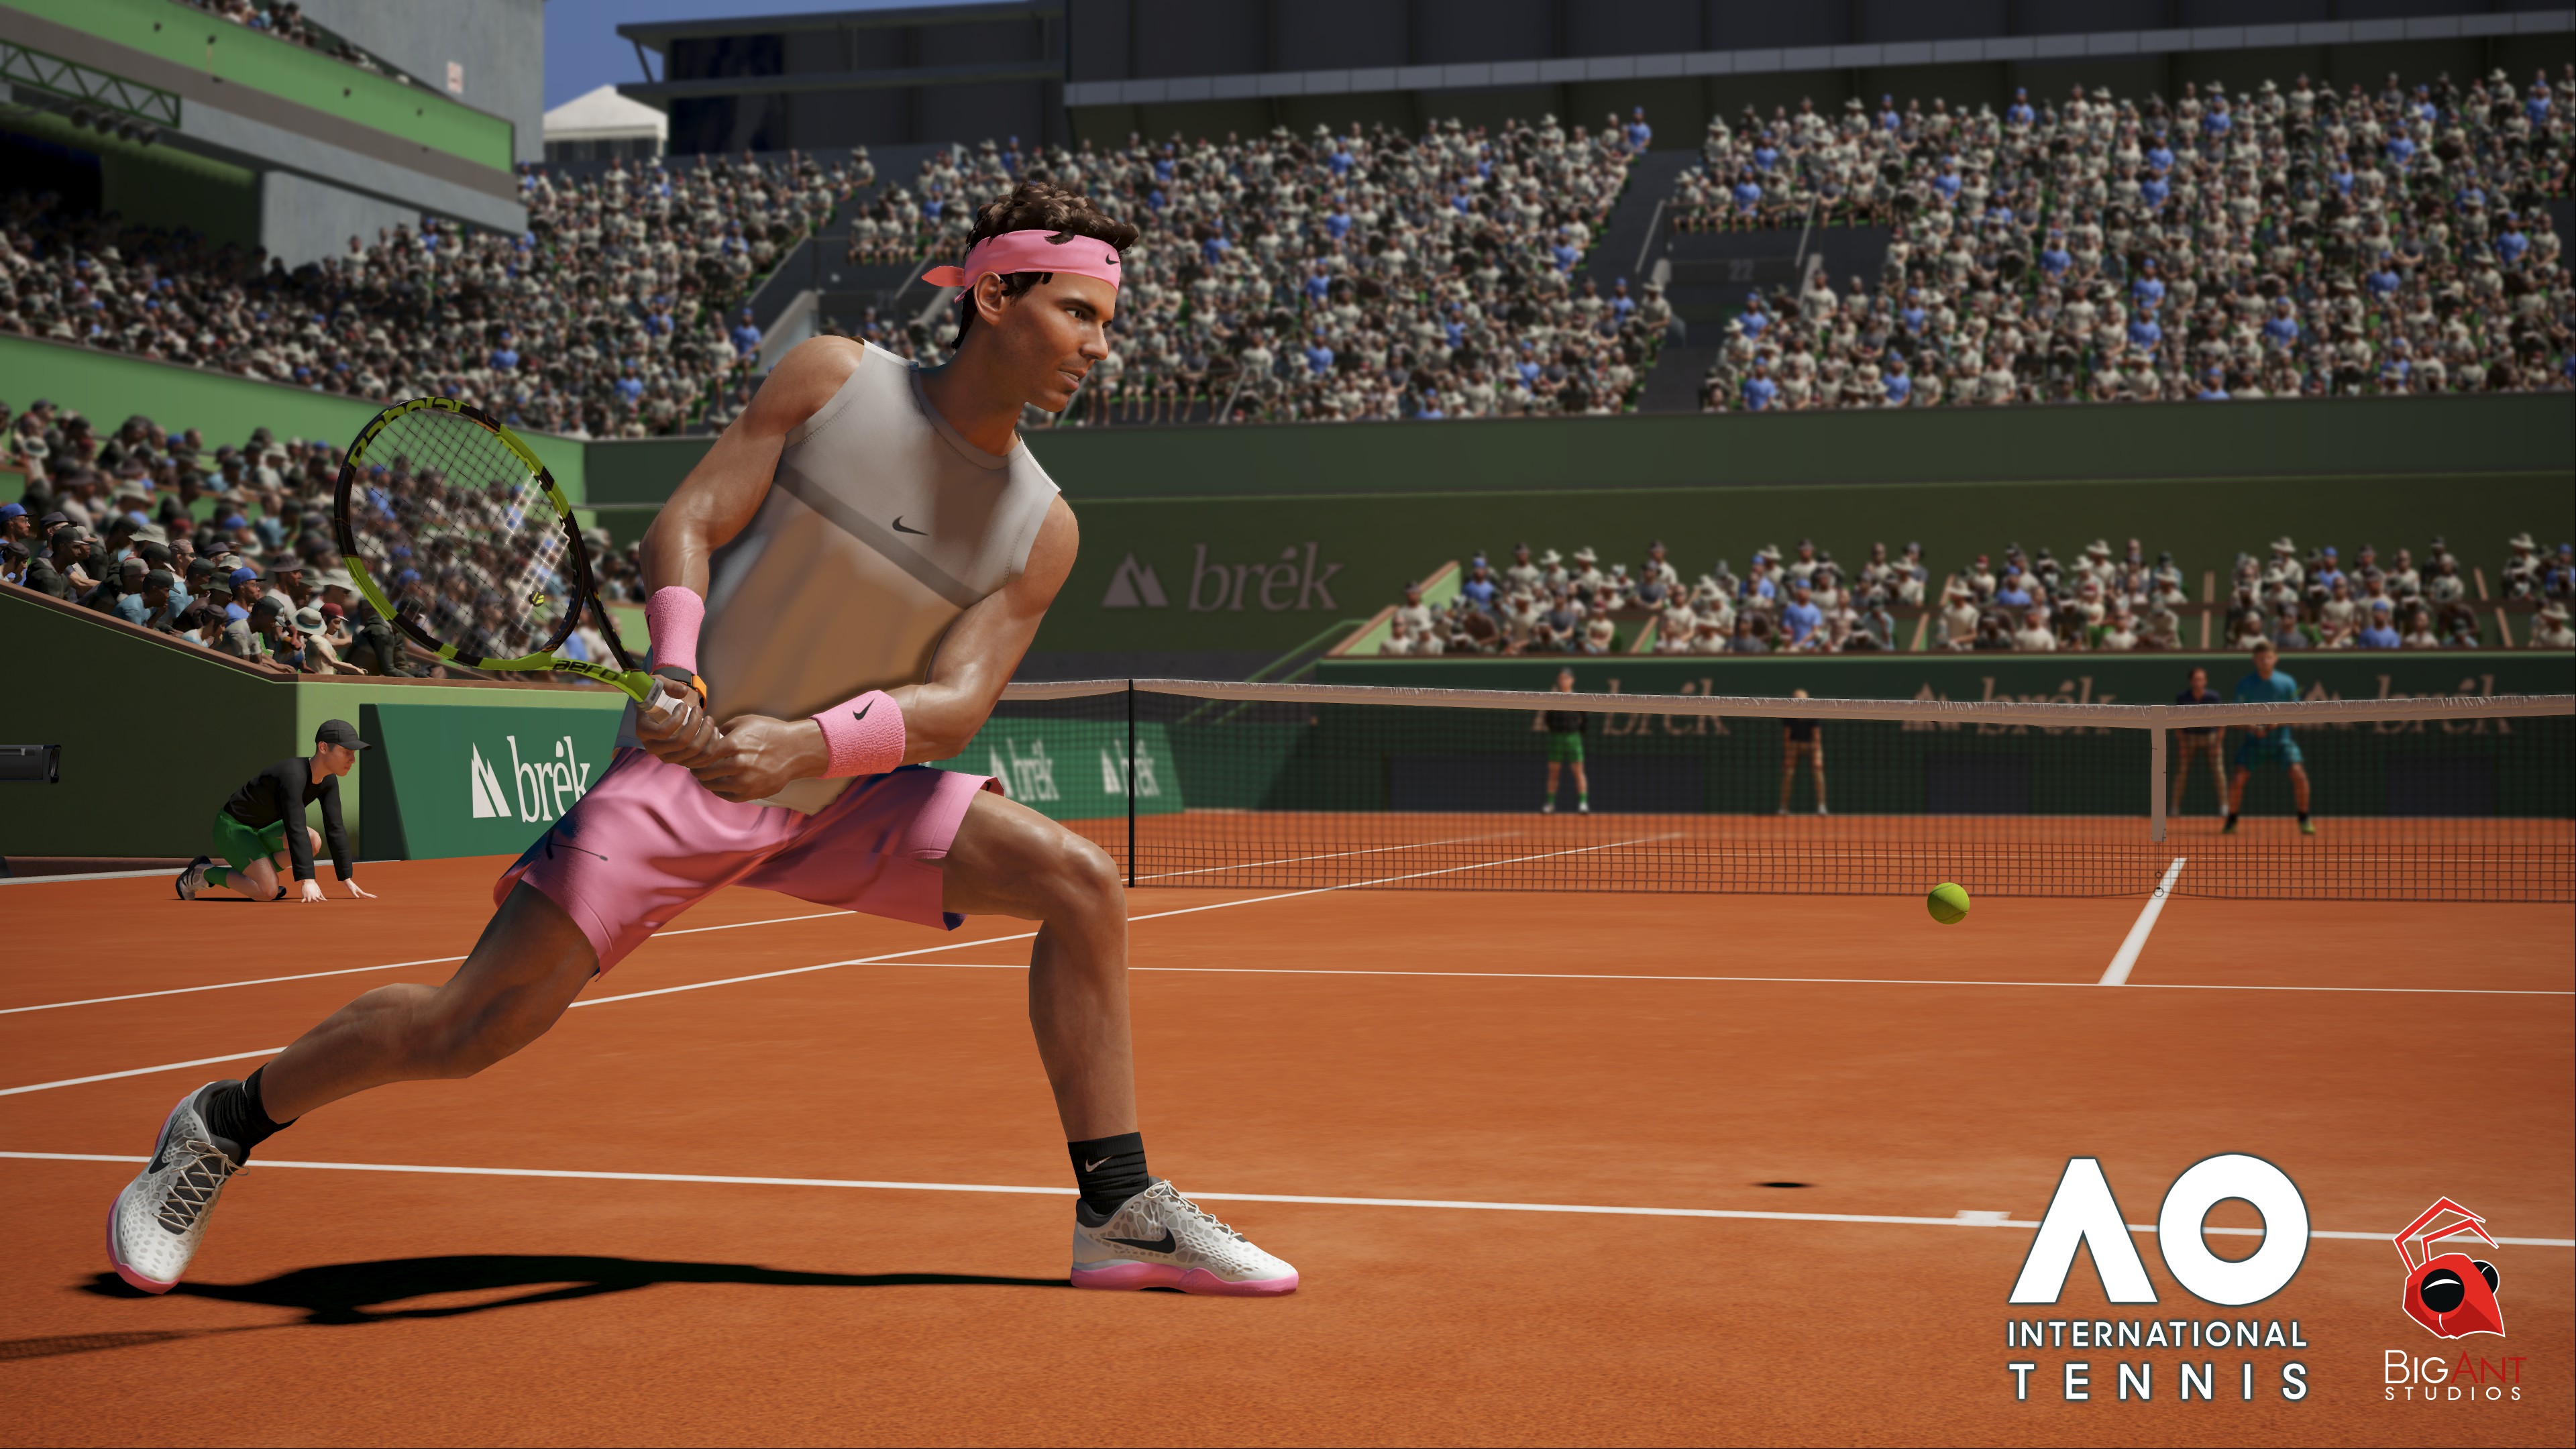 AO International Tennis Screenshot Rafael Nadal